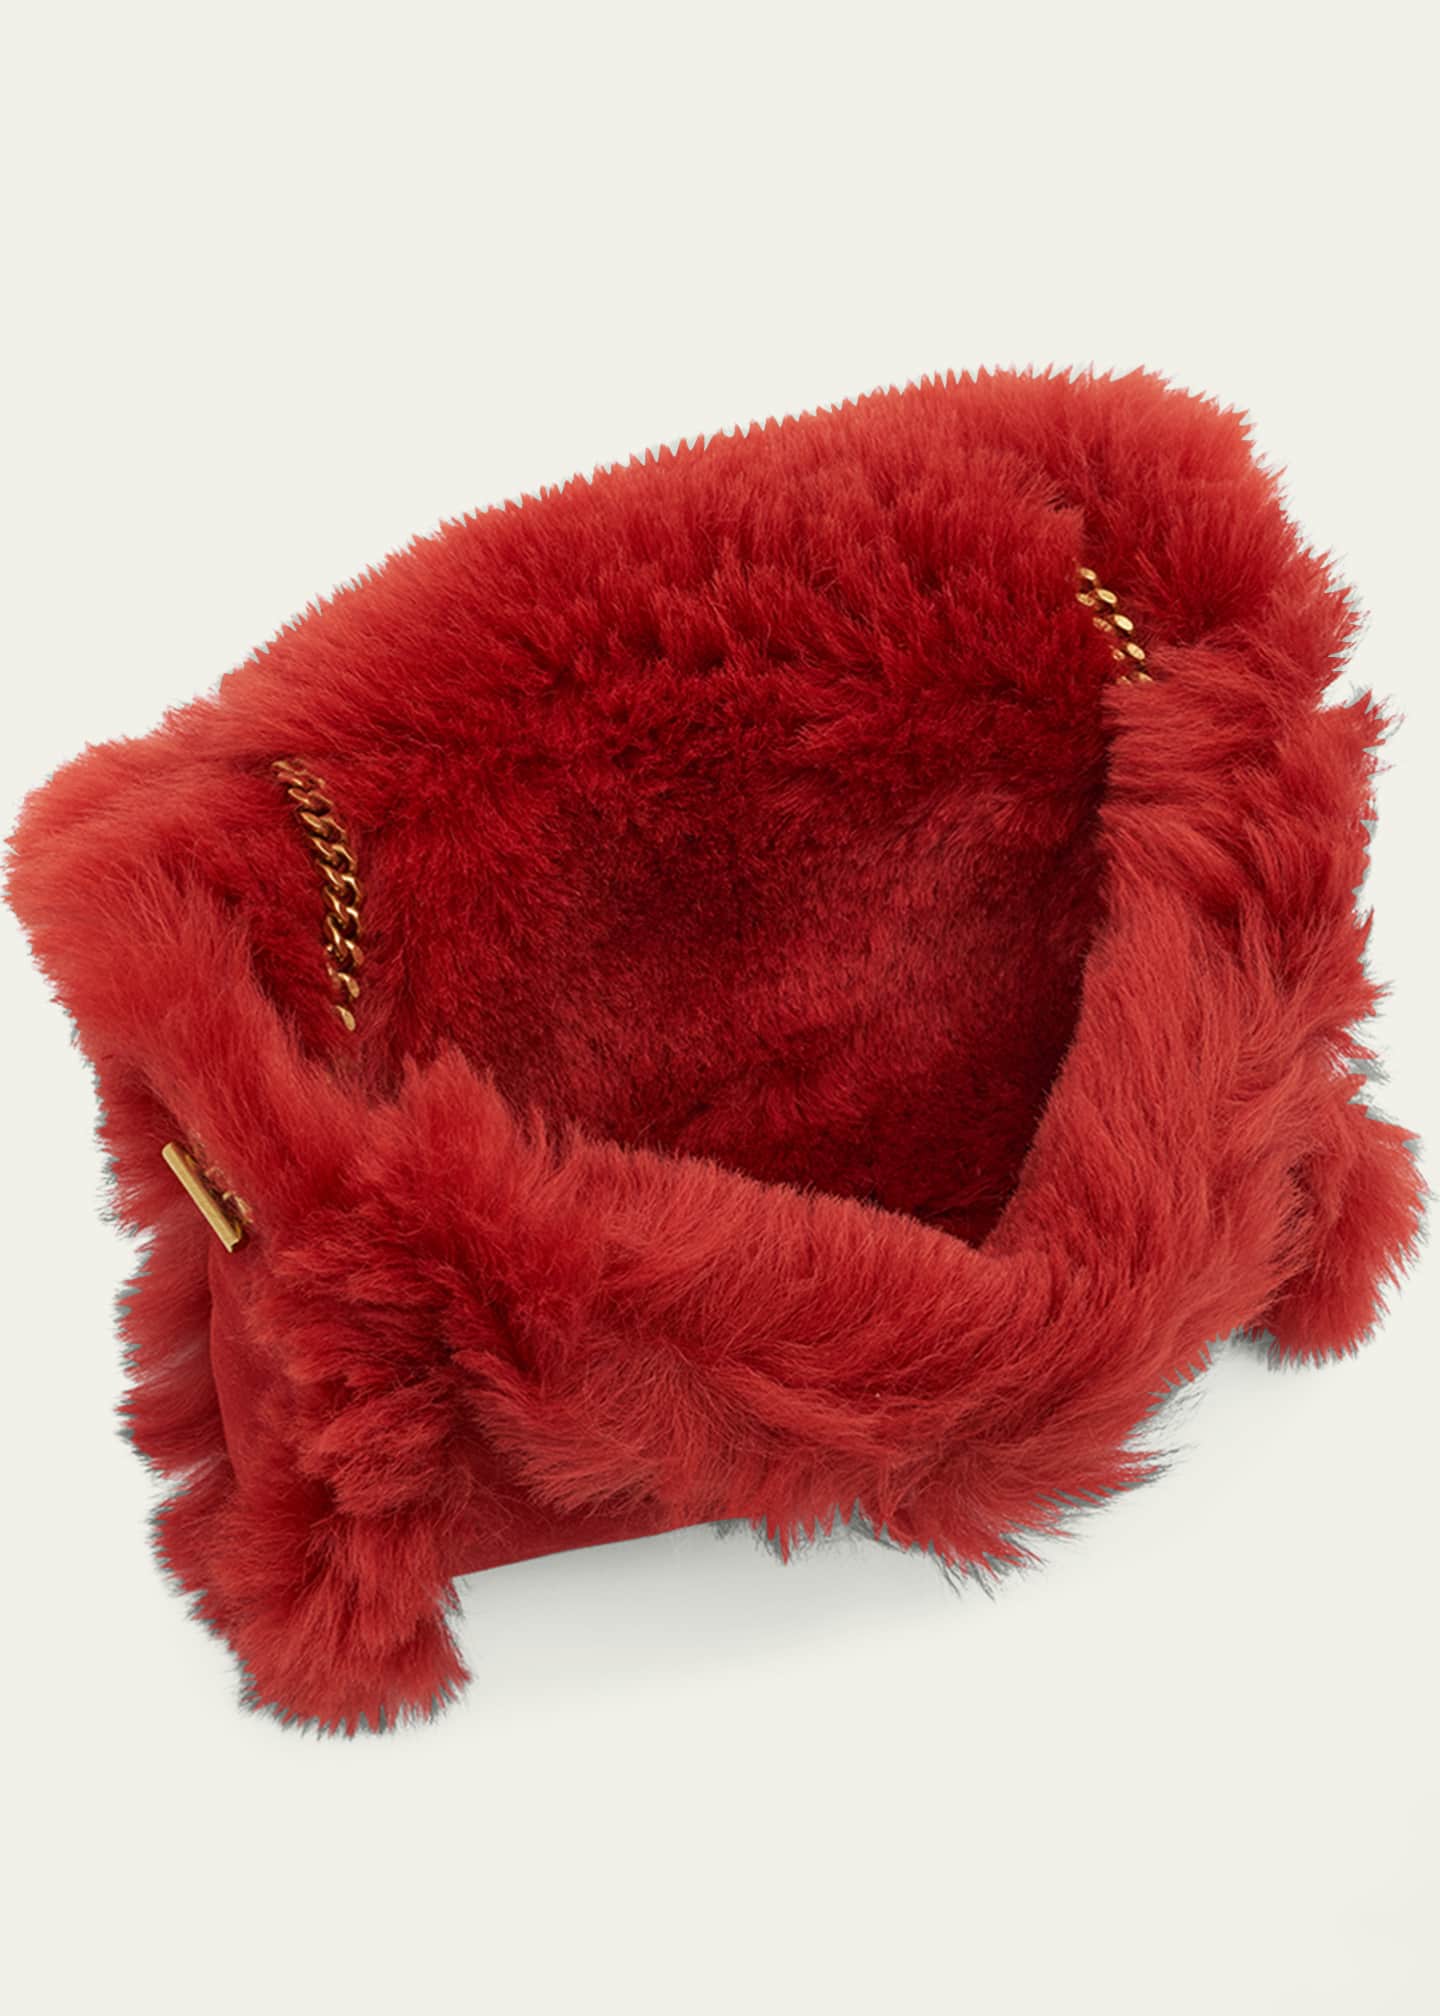 Saint Laurent Small Kate Reversible Shoulder Bag in Red